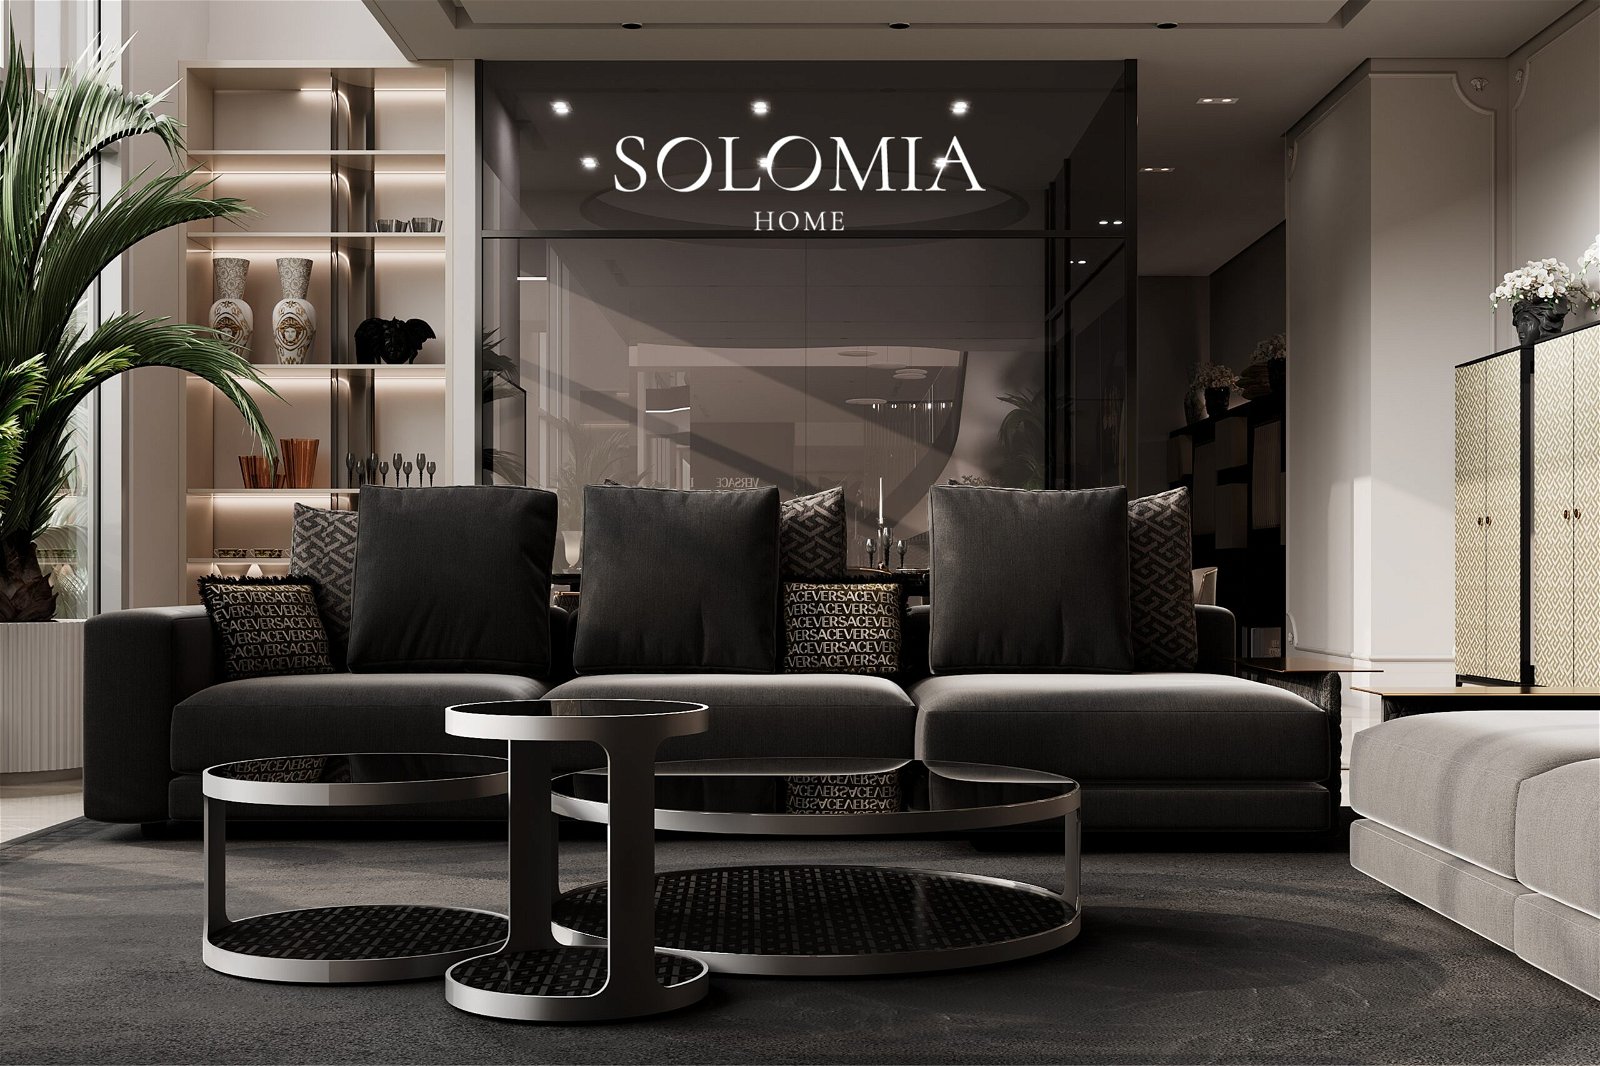 Solomia Home trade hall design